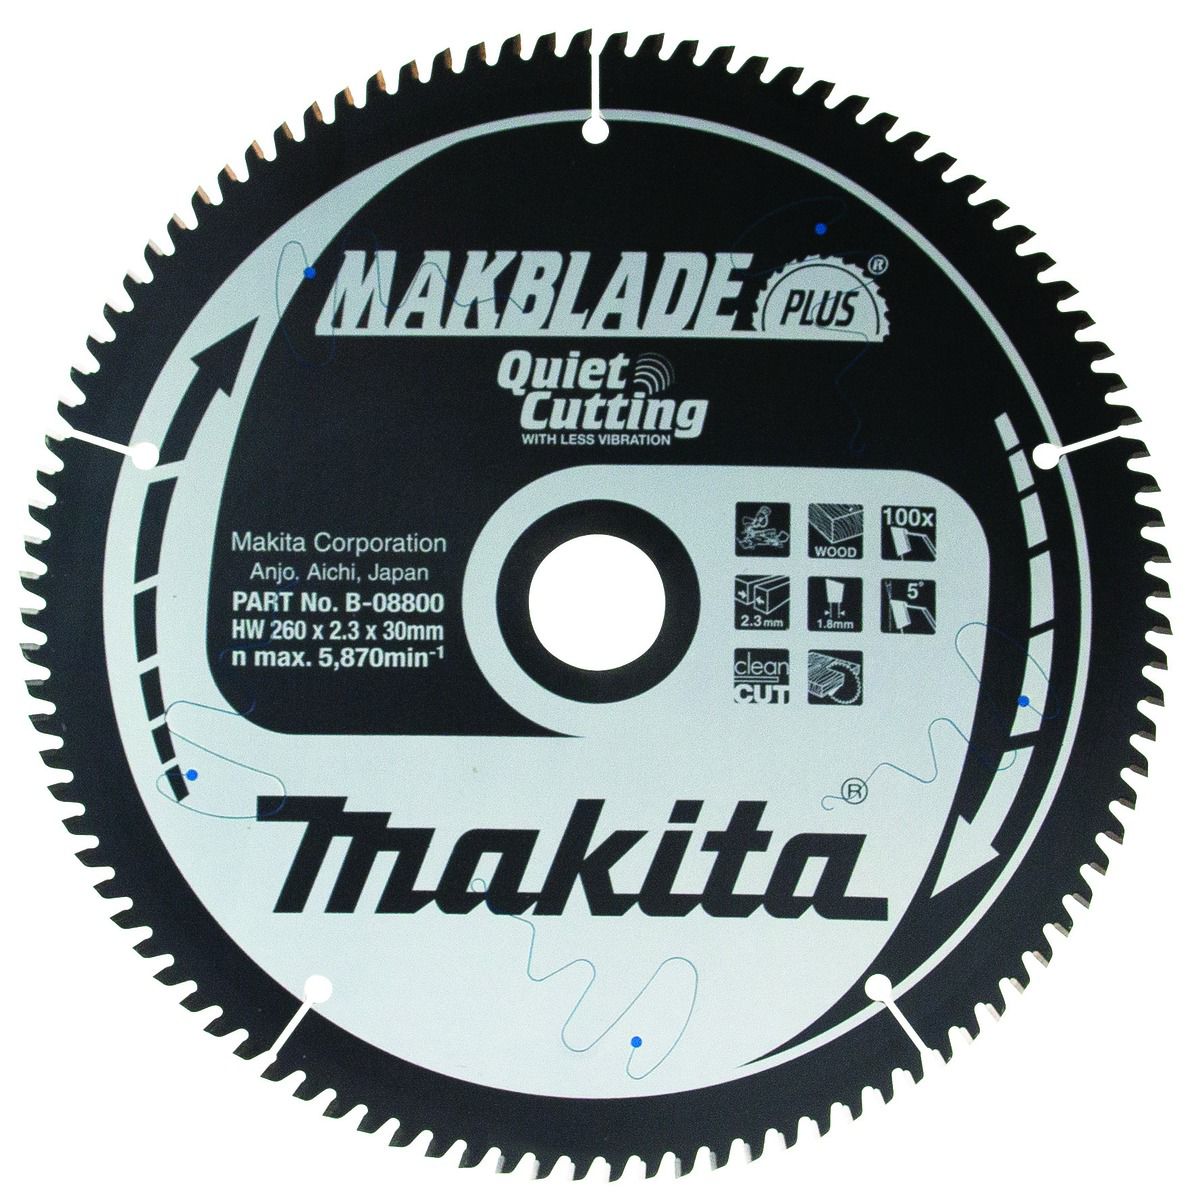 Image of Makita B-08800 Makblade Plus 100 Teeth Circular Saw Blade - 260 x 30mm